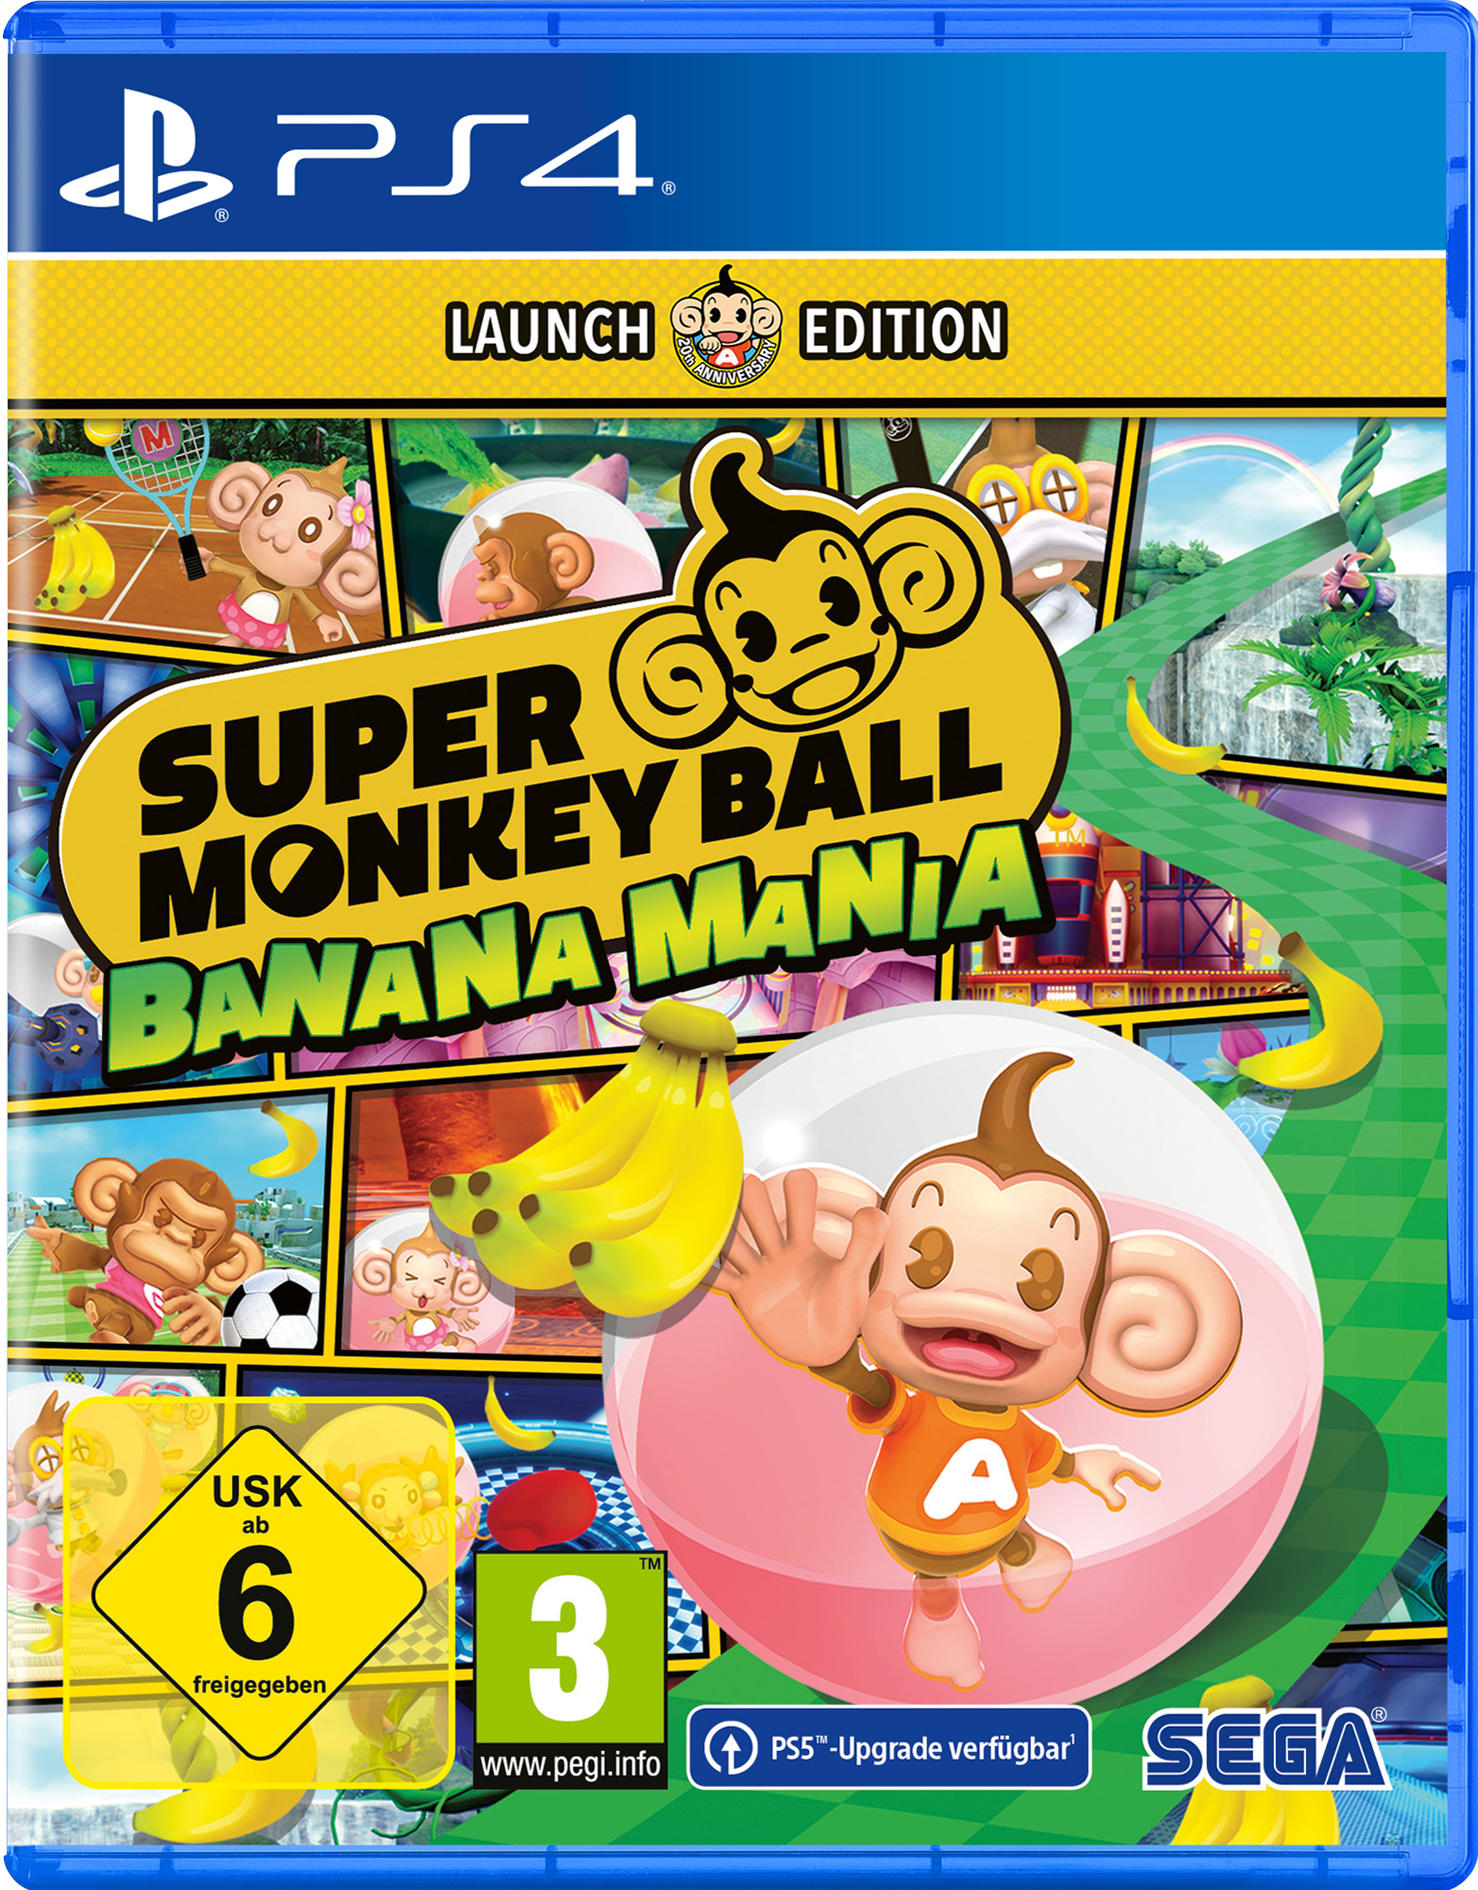 PS4 SUPER MONKEY BALL BANANA - [PlayStation 4] EDITION MANIALAUNCH